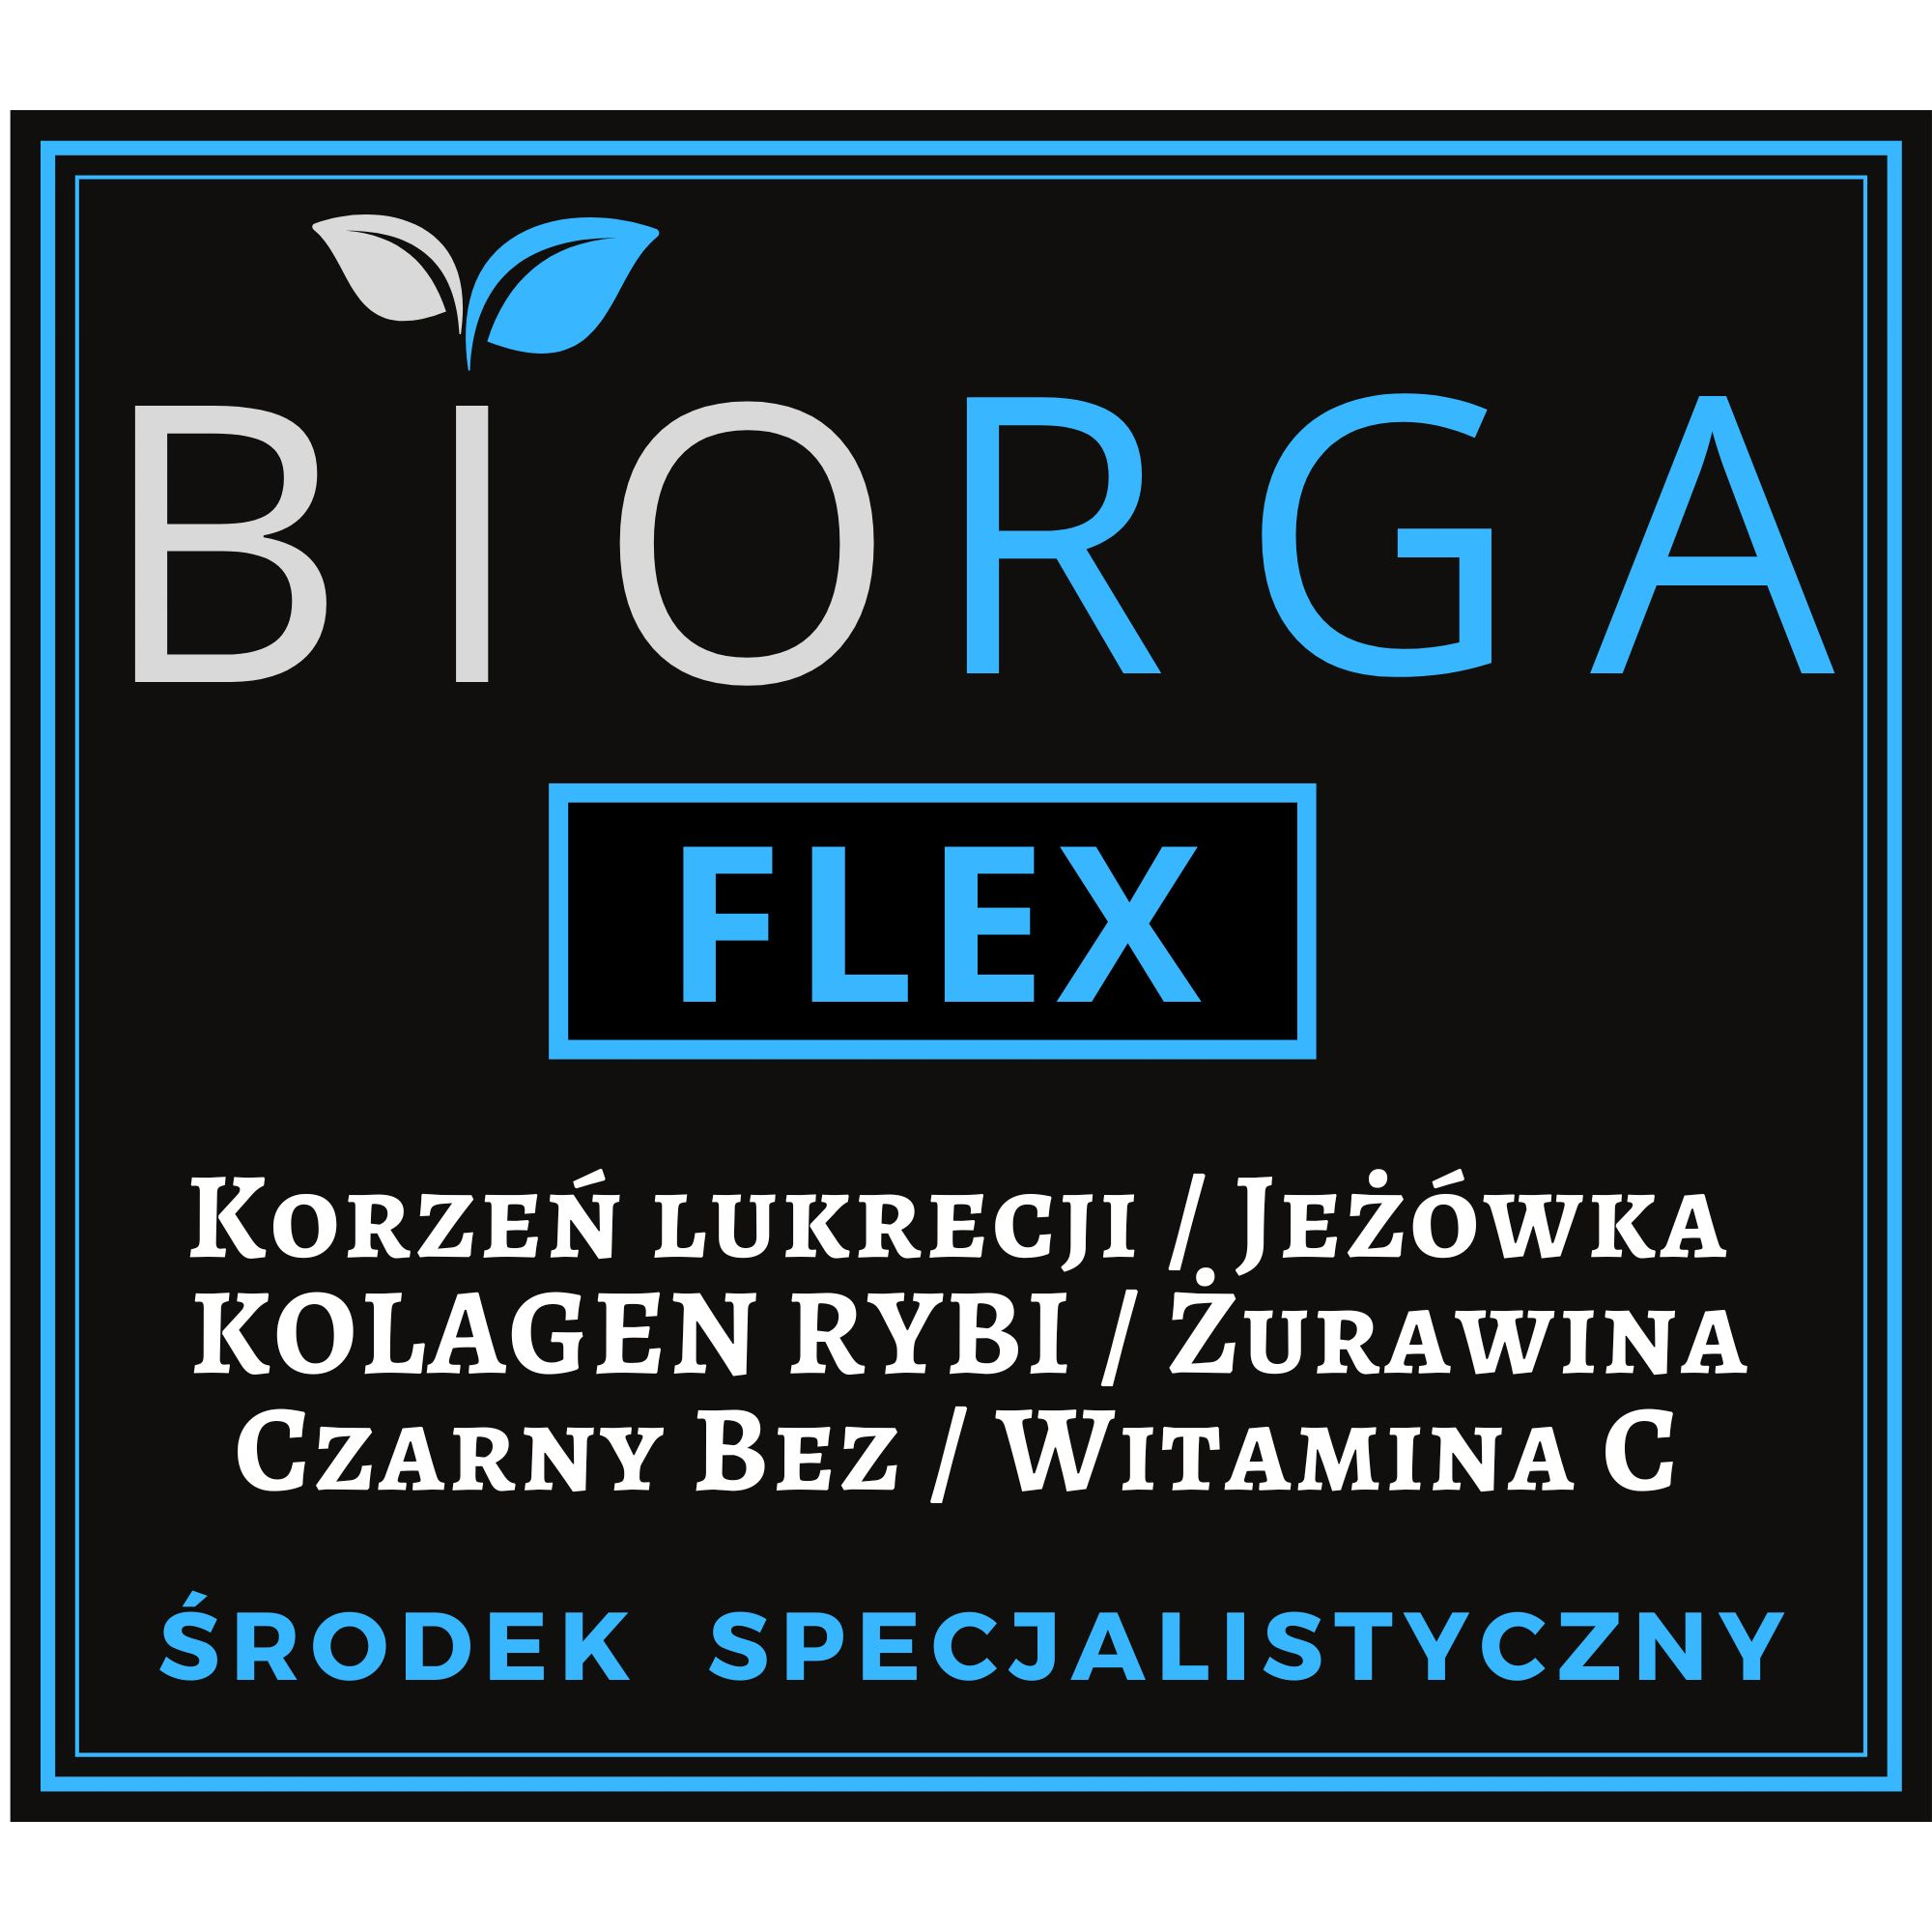 BIORGA FLEX